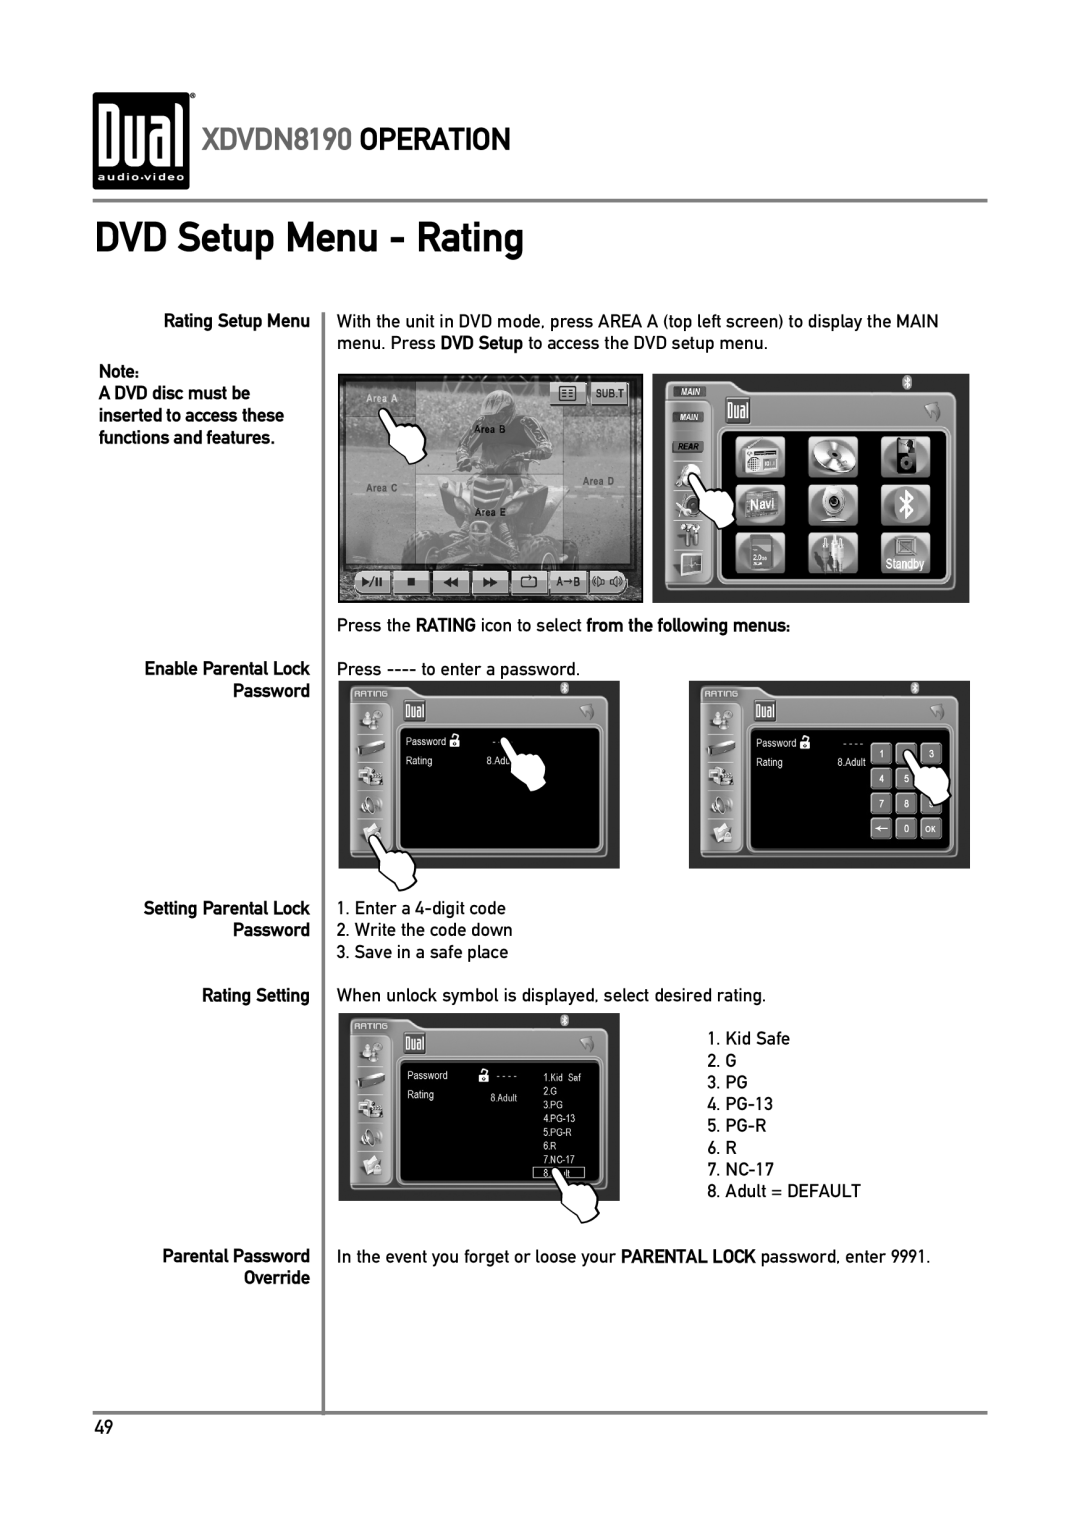 Dual DVD Setup Menu - Rating, XDVDN8190 OPERATION, Rating Setup Menu, Rating Setting Parental Password Override 